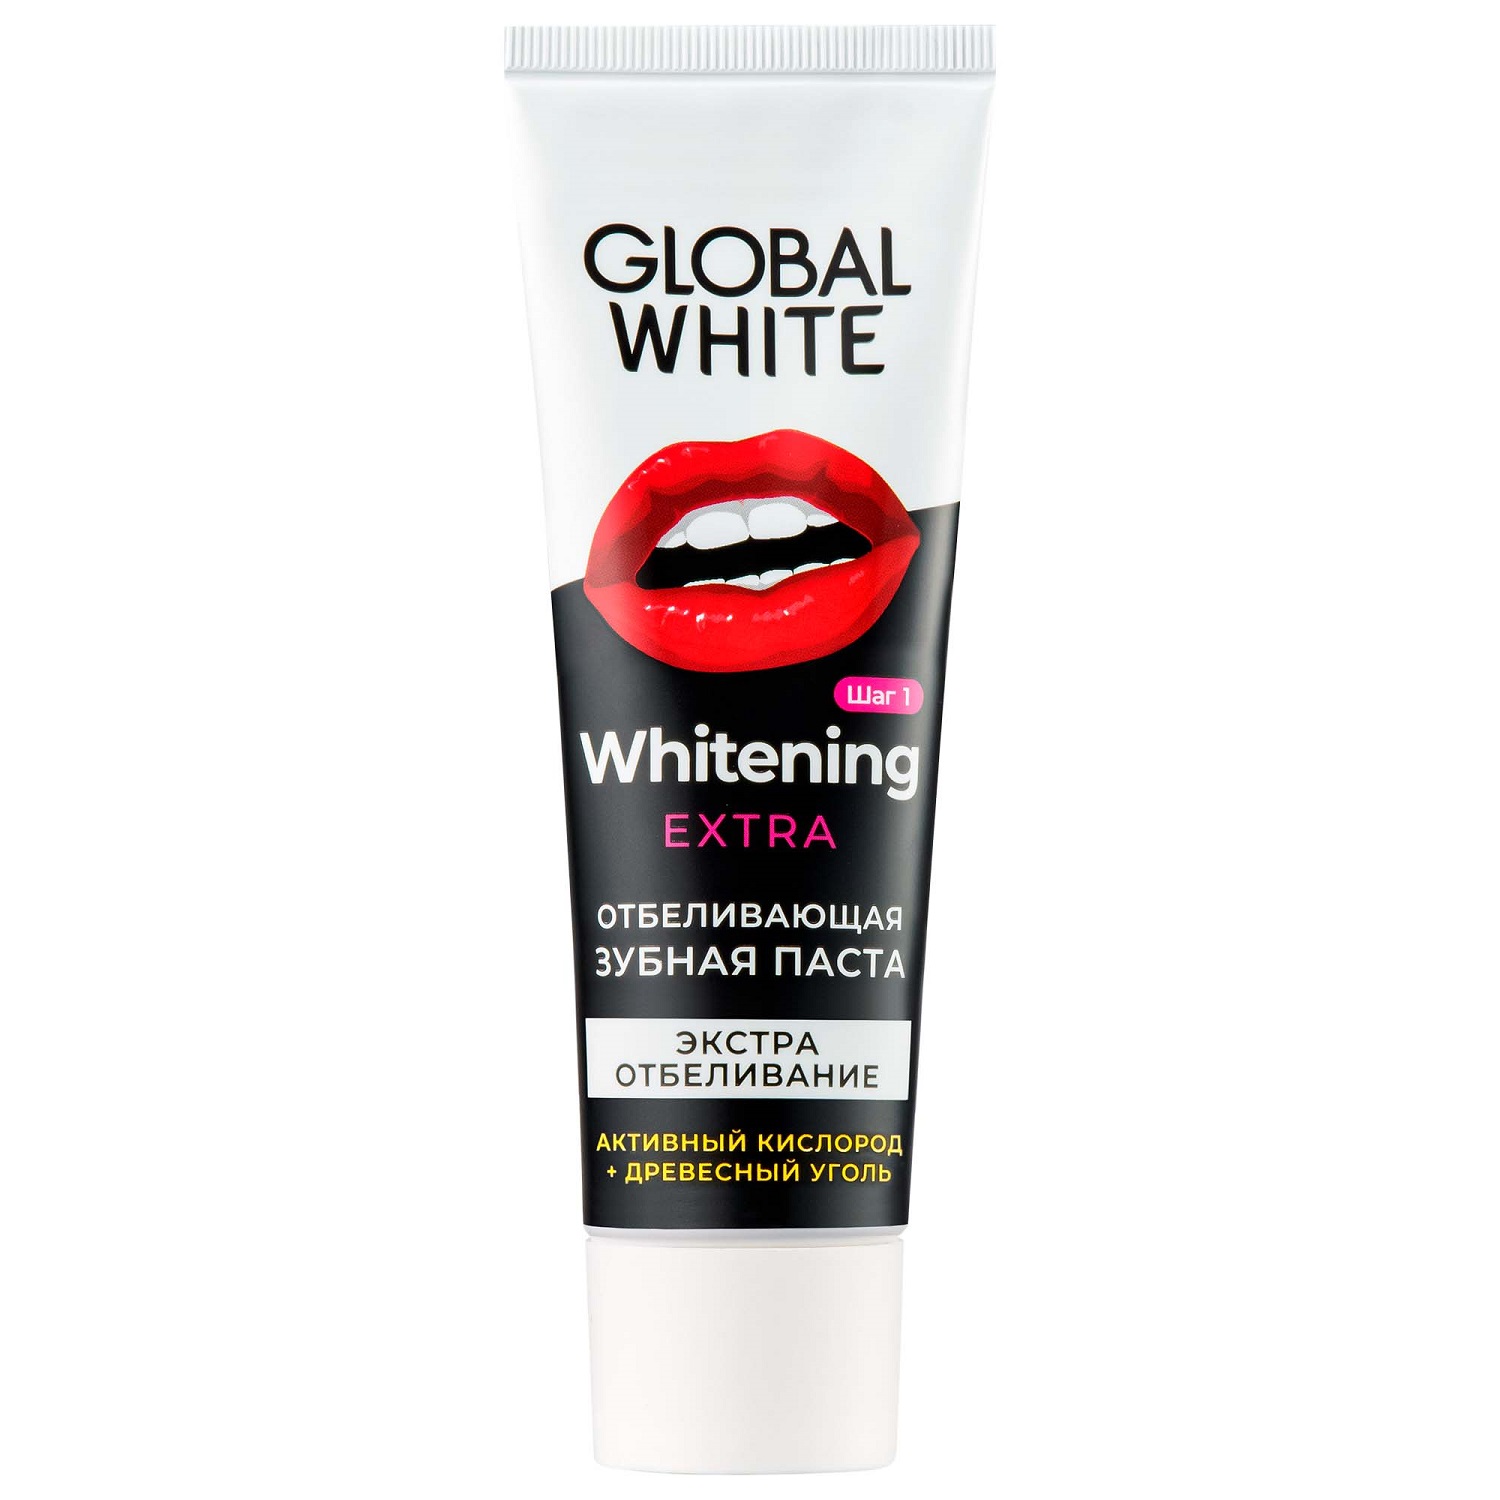 Global White Отбеливающая зубная паста Extra Whitening, 30 мл (Global White, Подготовка к отбеливанию) черная зубная паста с активированным углем и бамбуковым углем для ухода за дыханием отбеливающий инструмент желтый m1x5